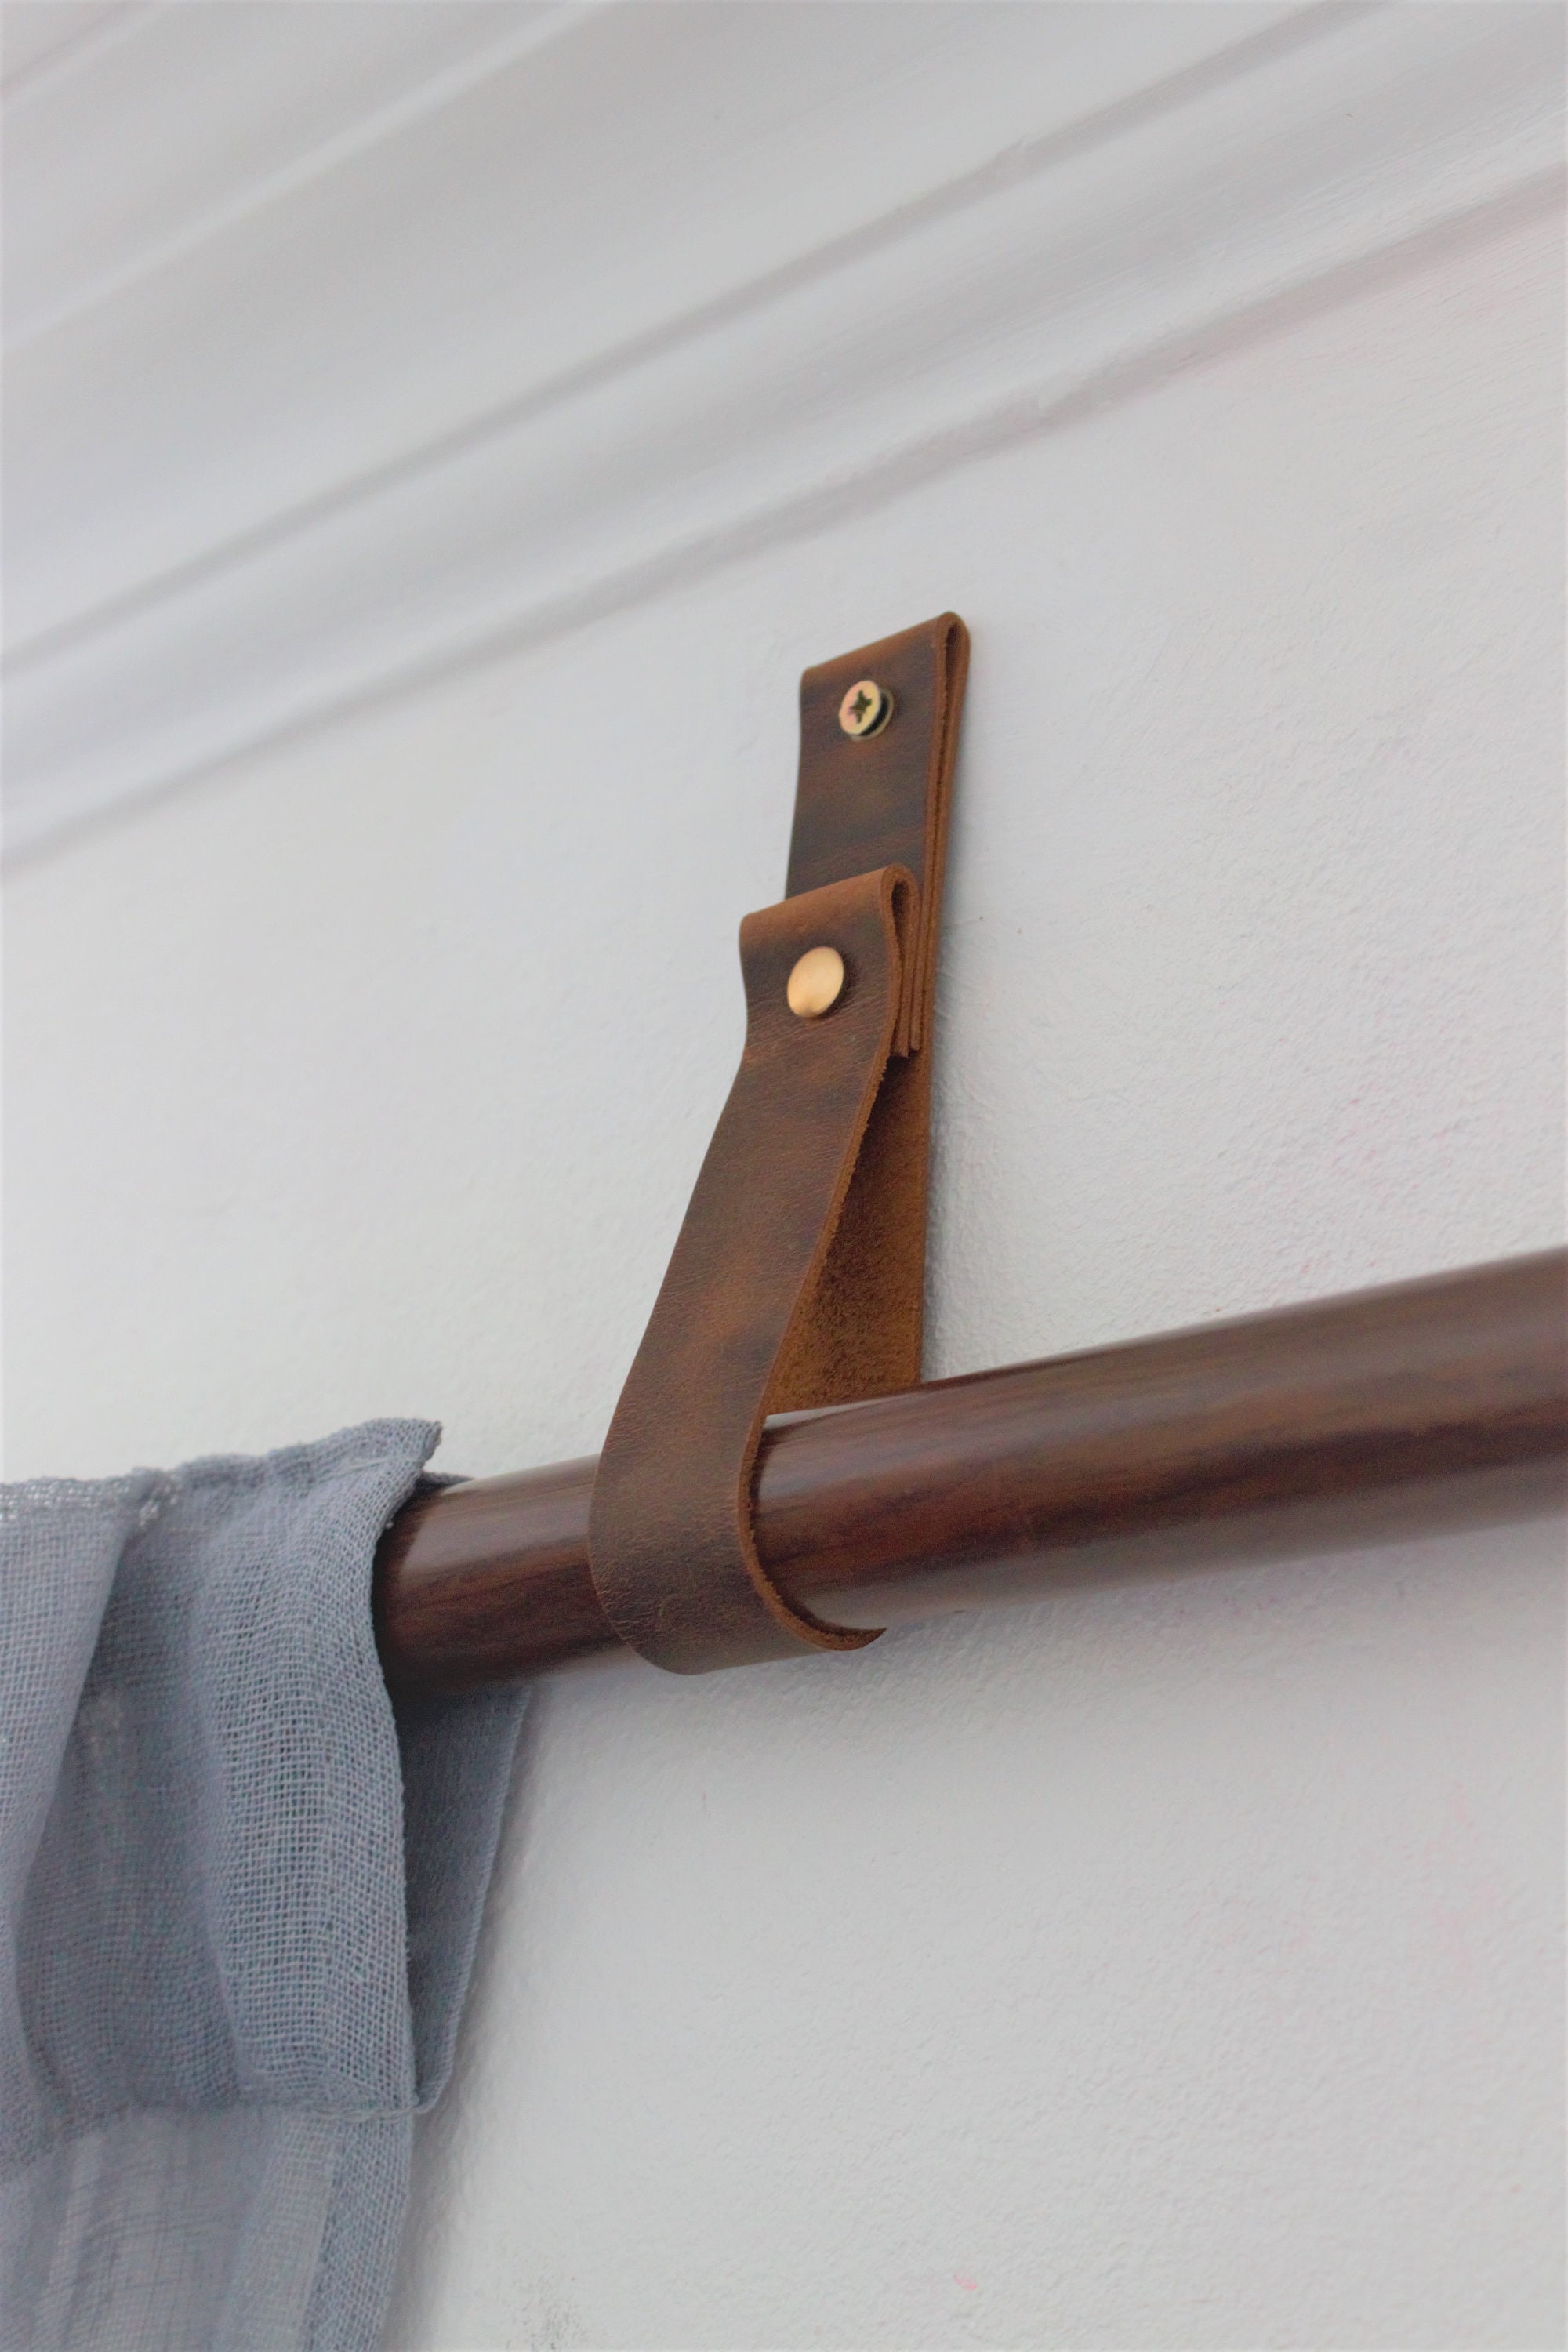 Leather Ceiling Straps Hanging Dowel Holder Clothing Rack Rod